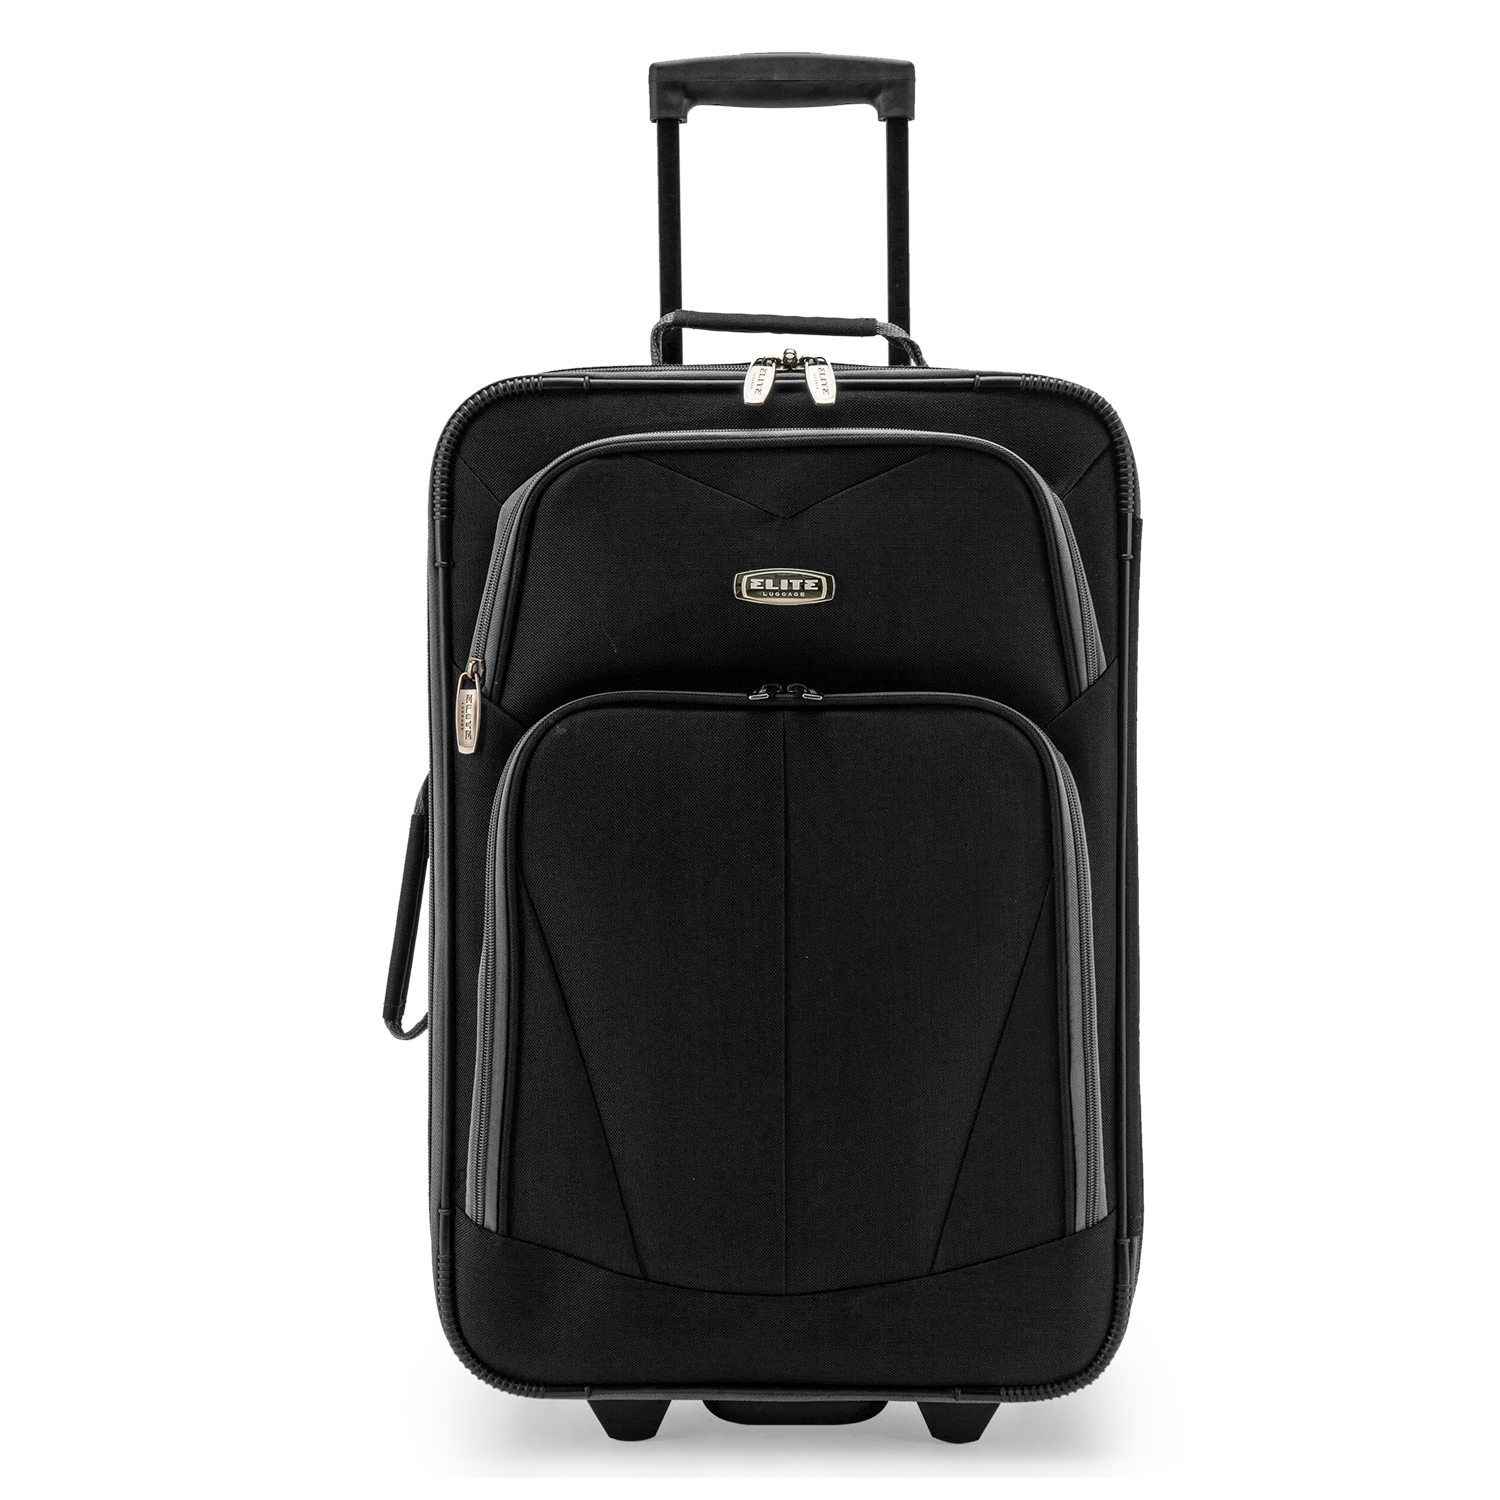 Elite Luggage Whitfield 5-Piece Softside Lightweight Rolling Luggage Set, Black - image 3 of 15